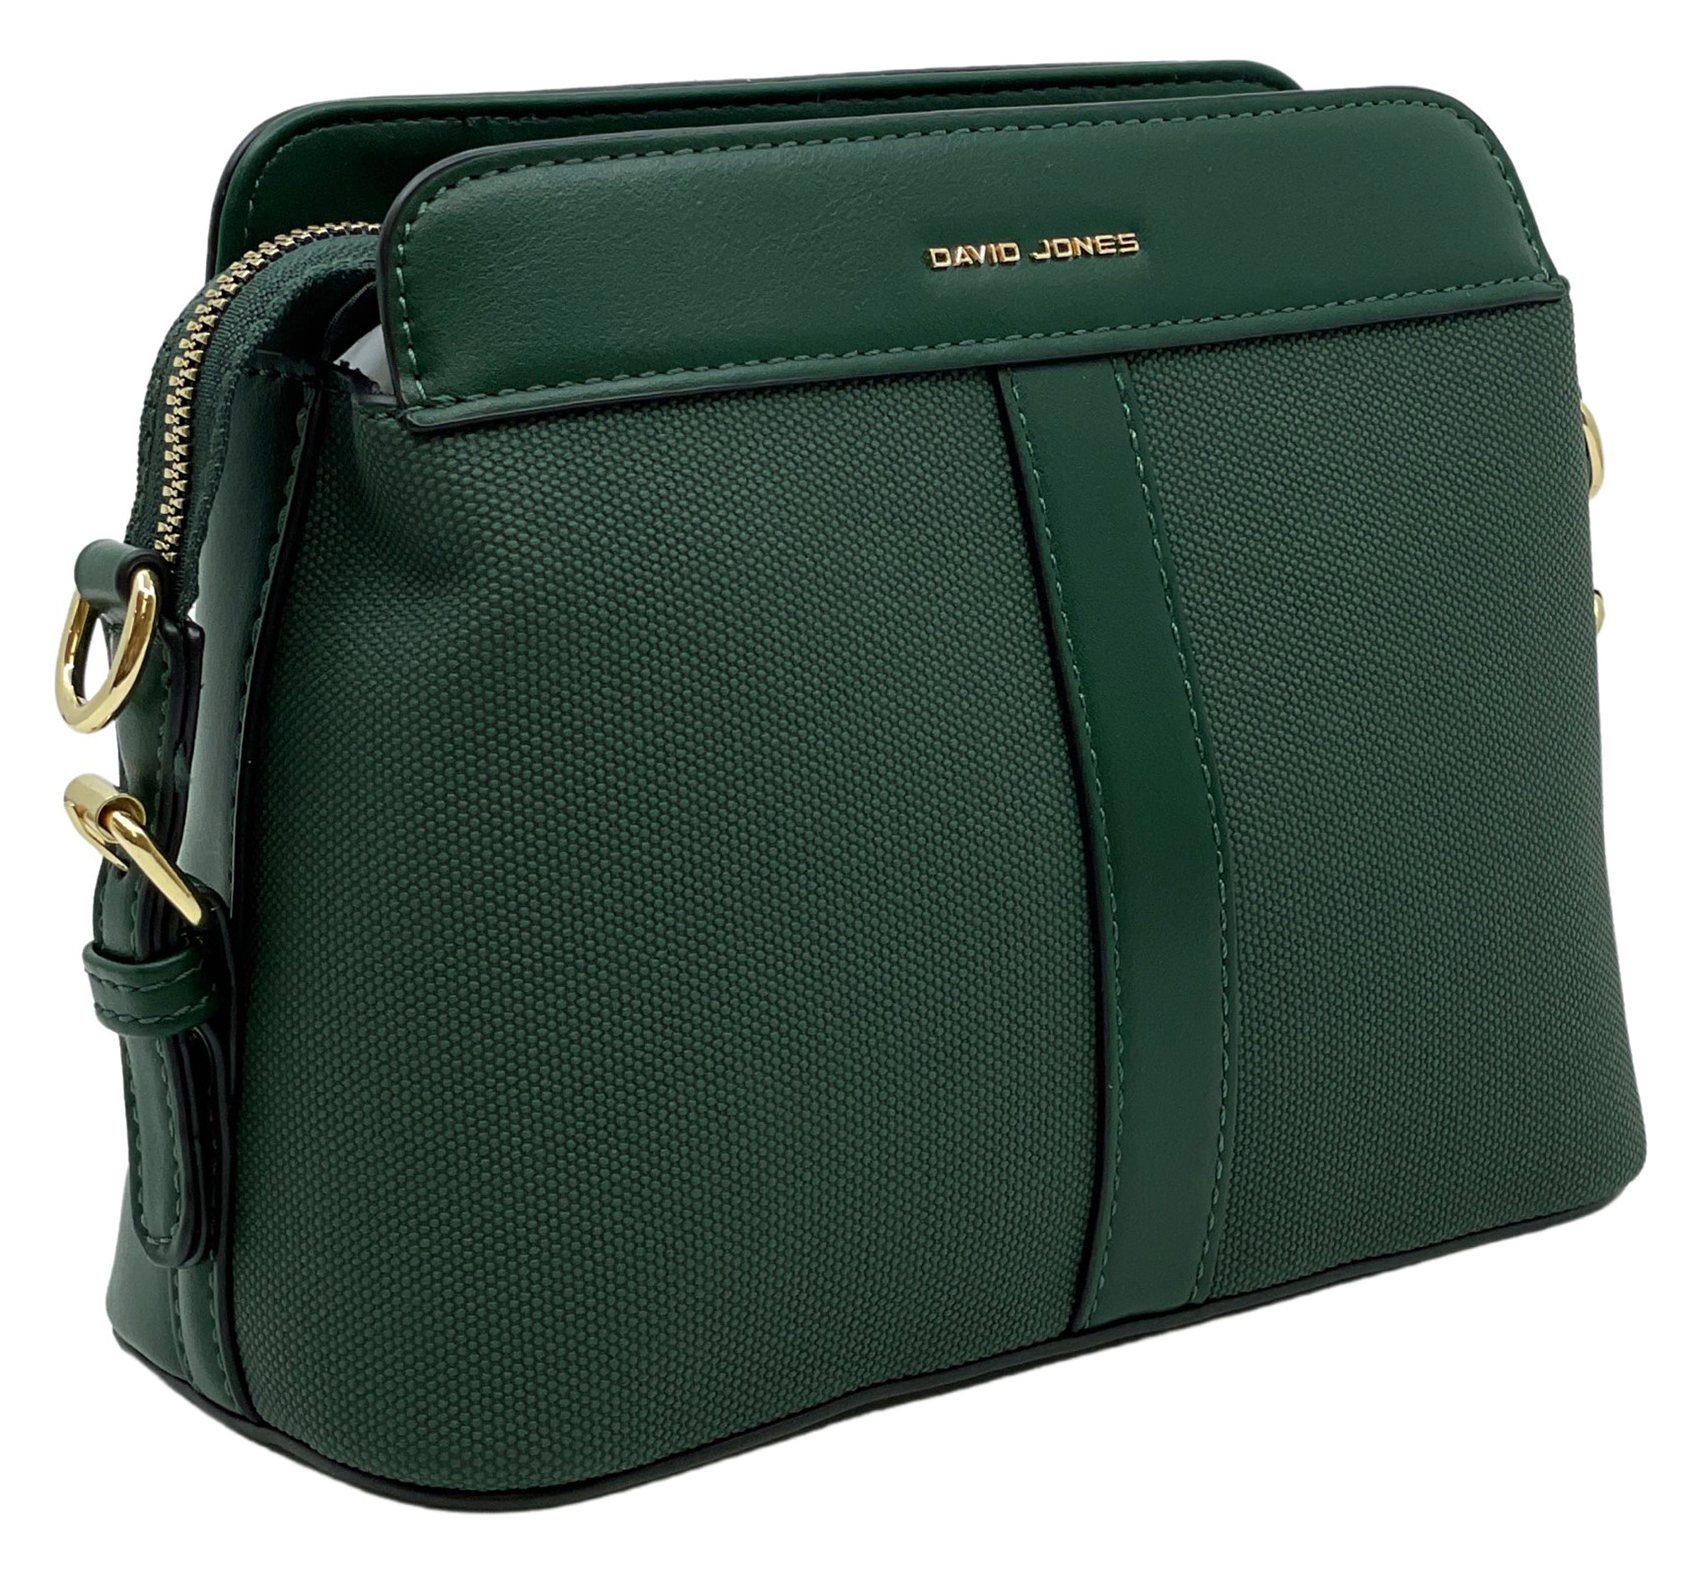 Handbag Woman David Jones Size M Green New